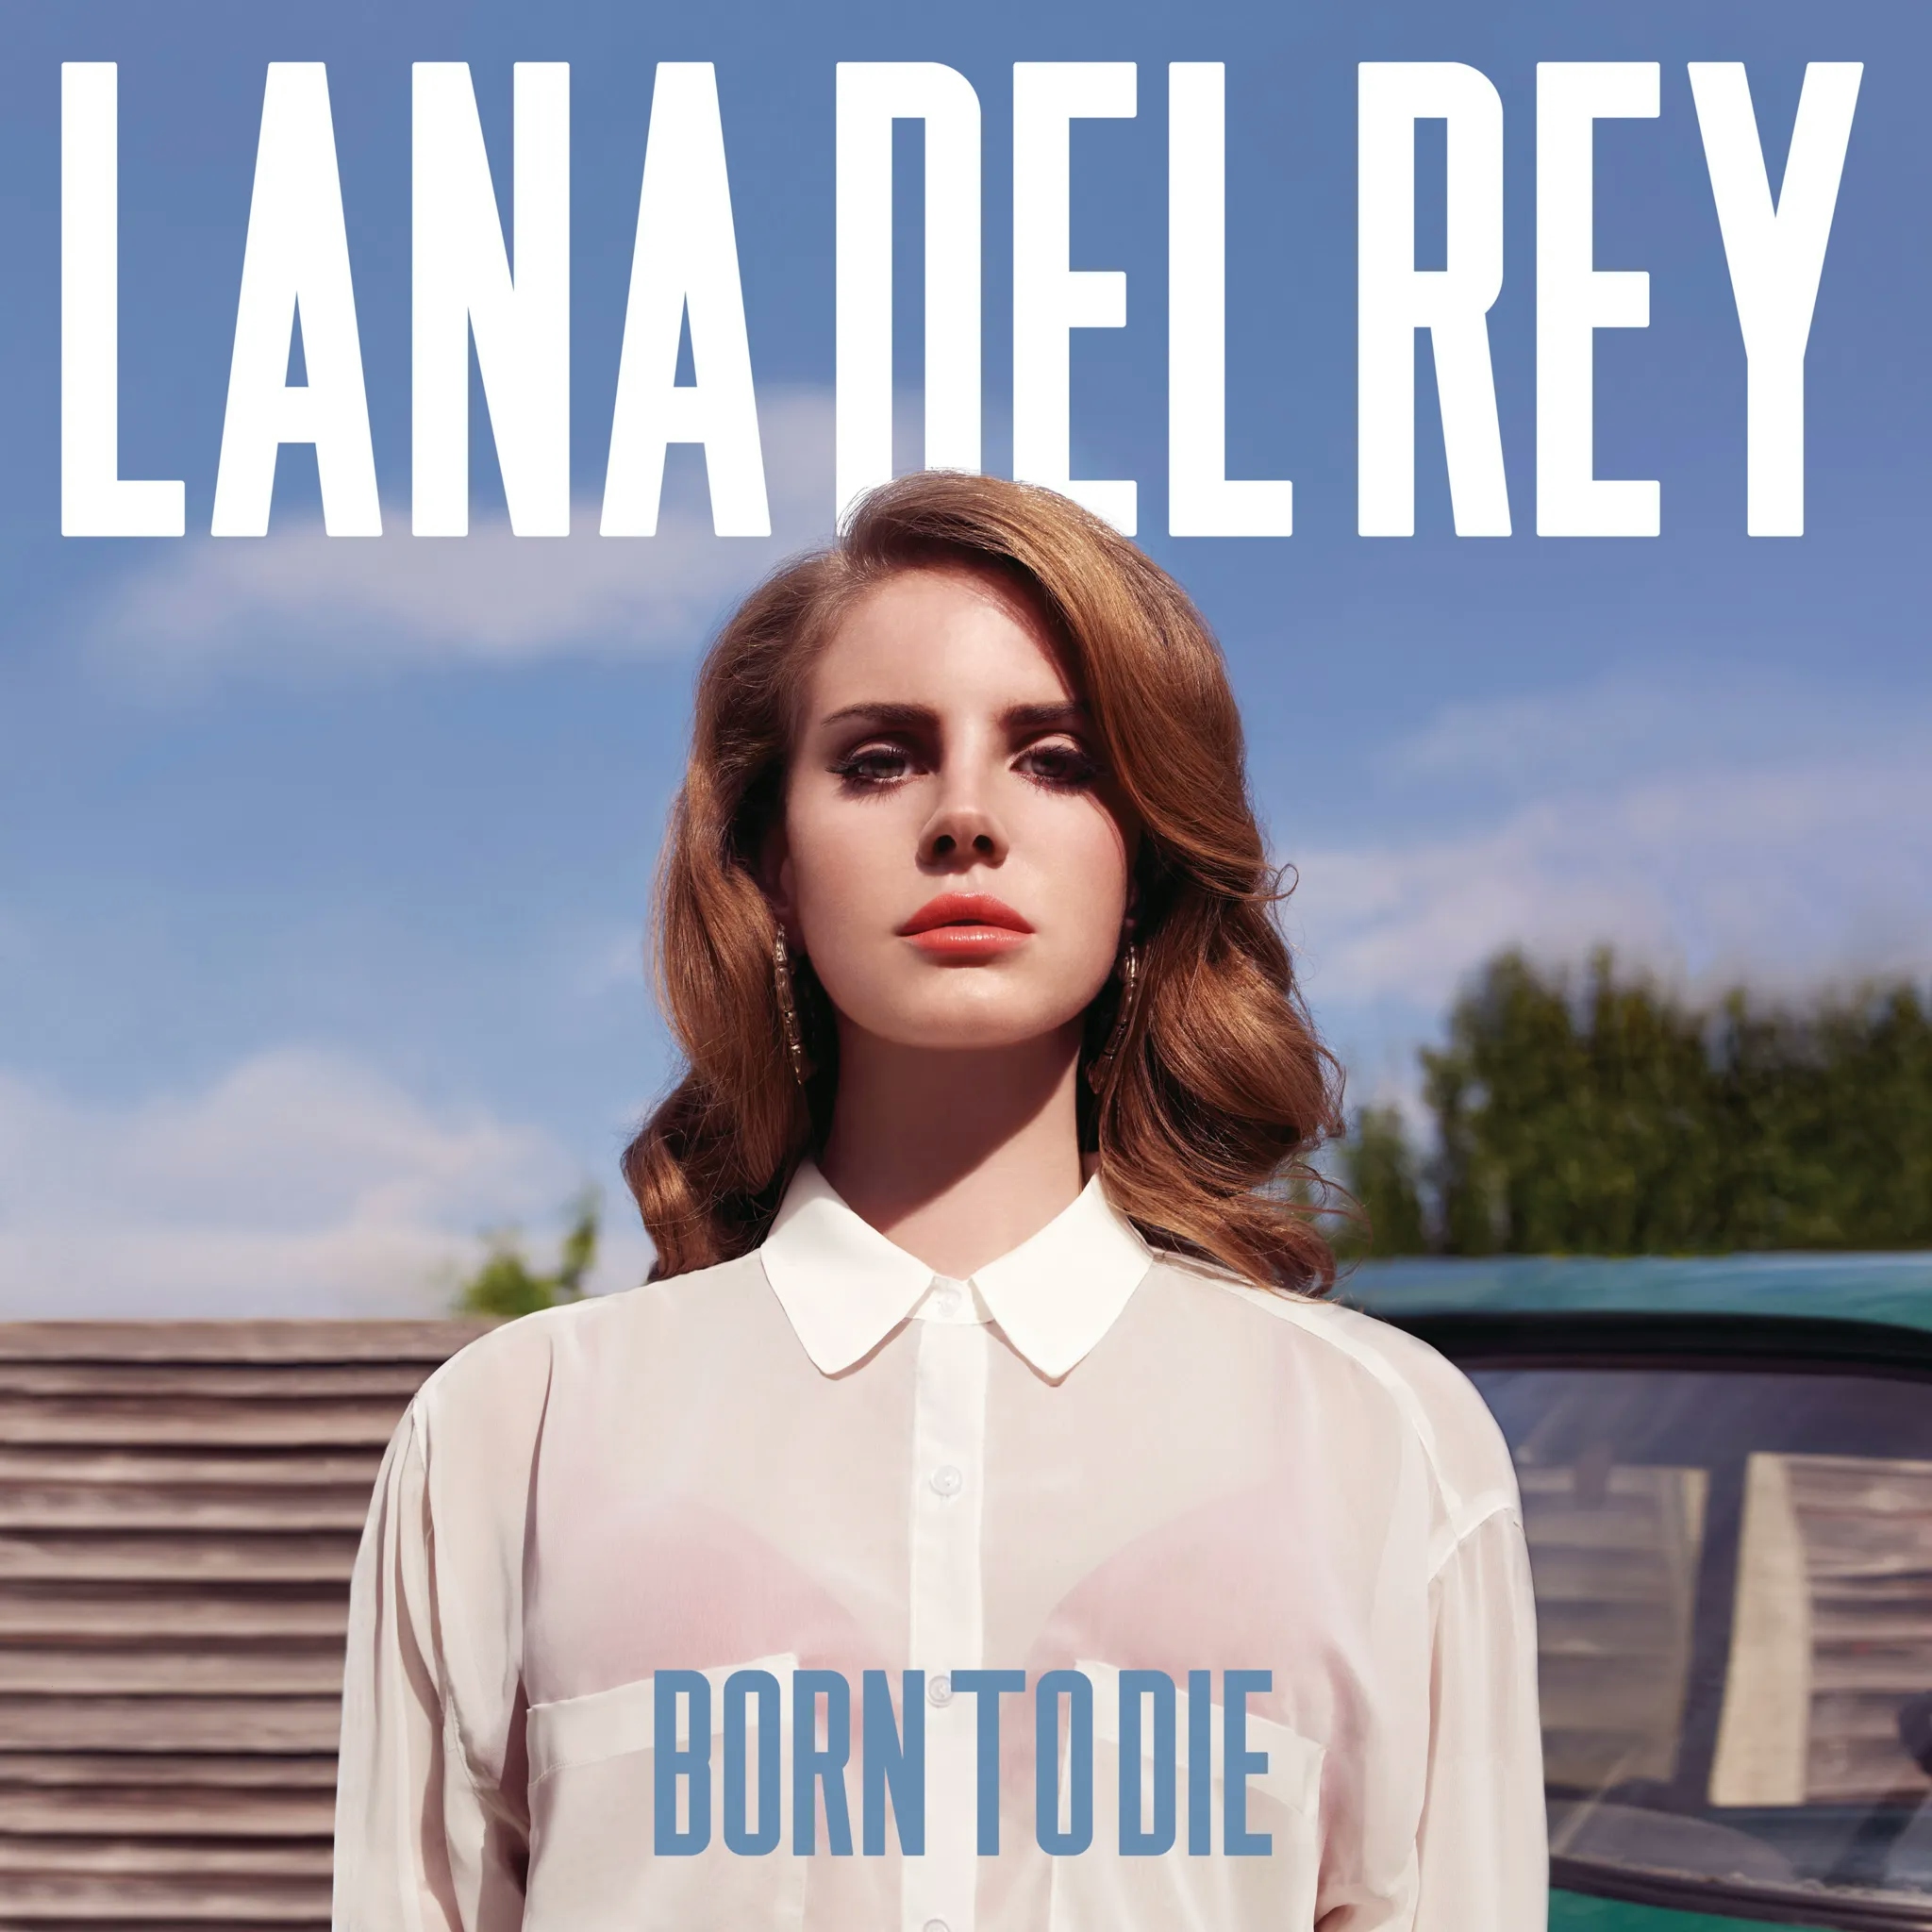 Album artwork for Born To Die by Lana Del Rey